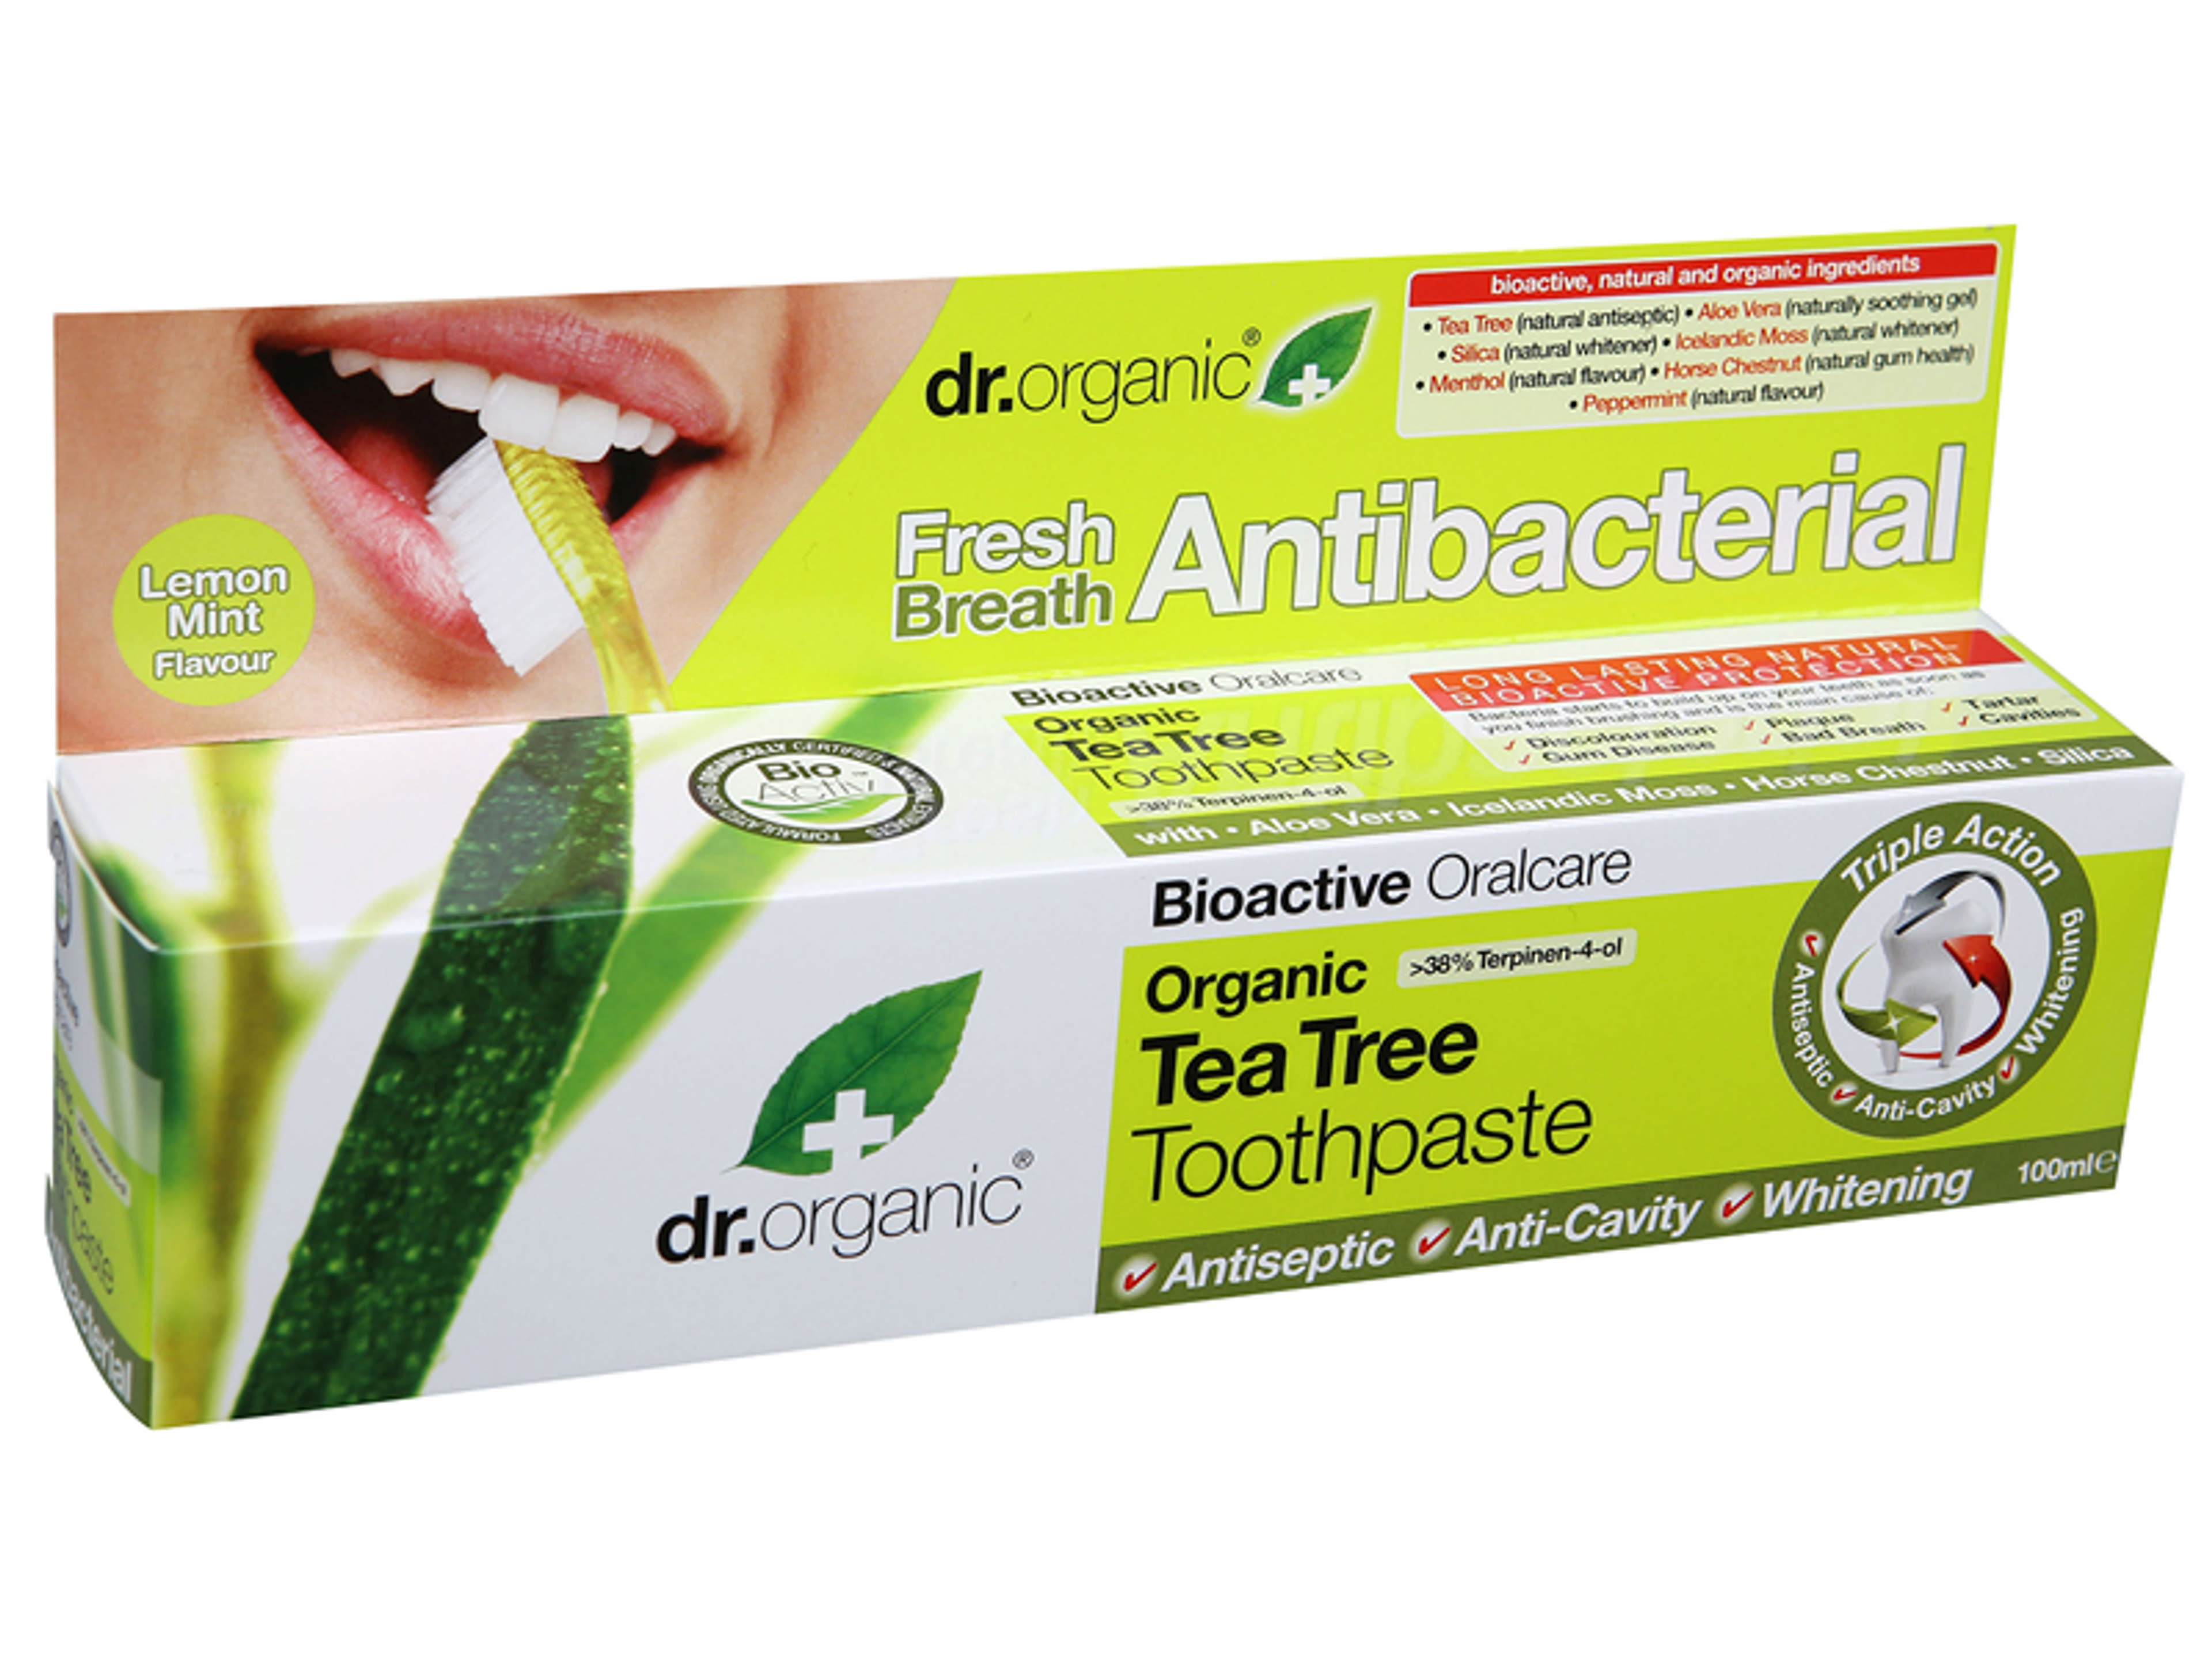 Dr.Organic Bio Teafaolajjal fogkrém - 100 ml-1